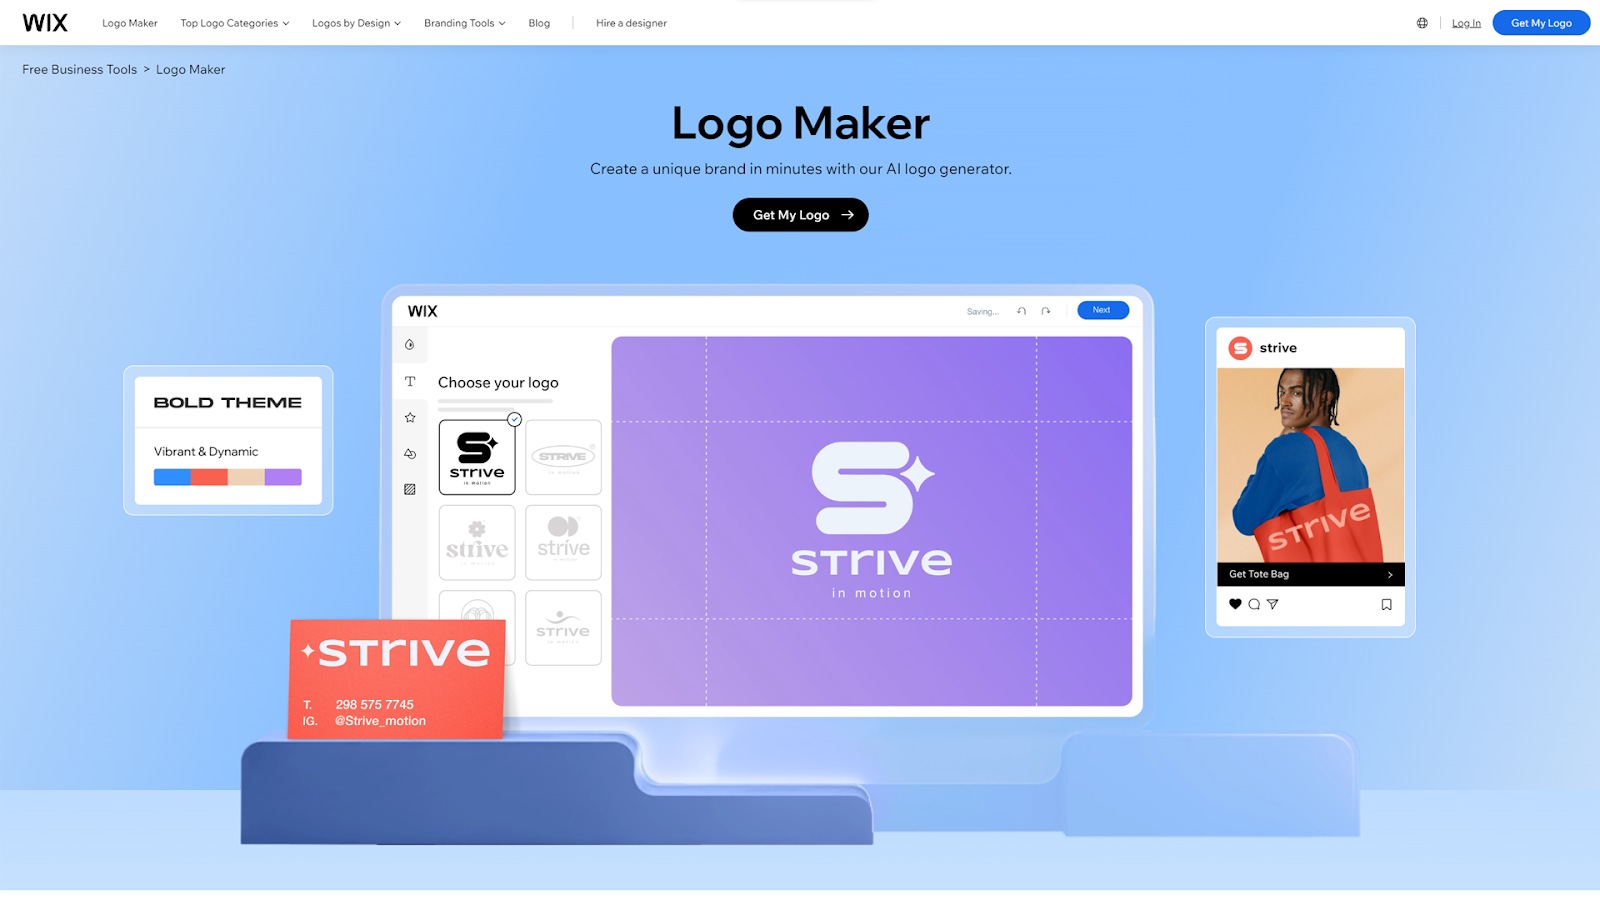 wix logo maker homepage
